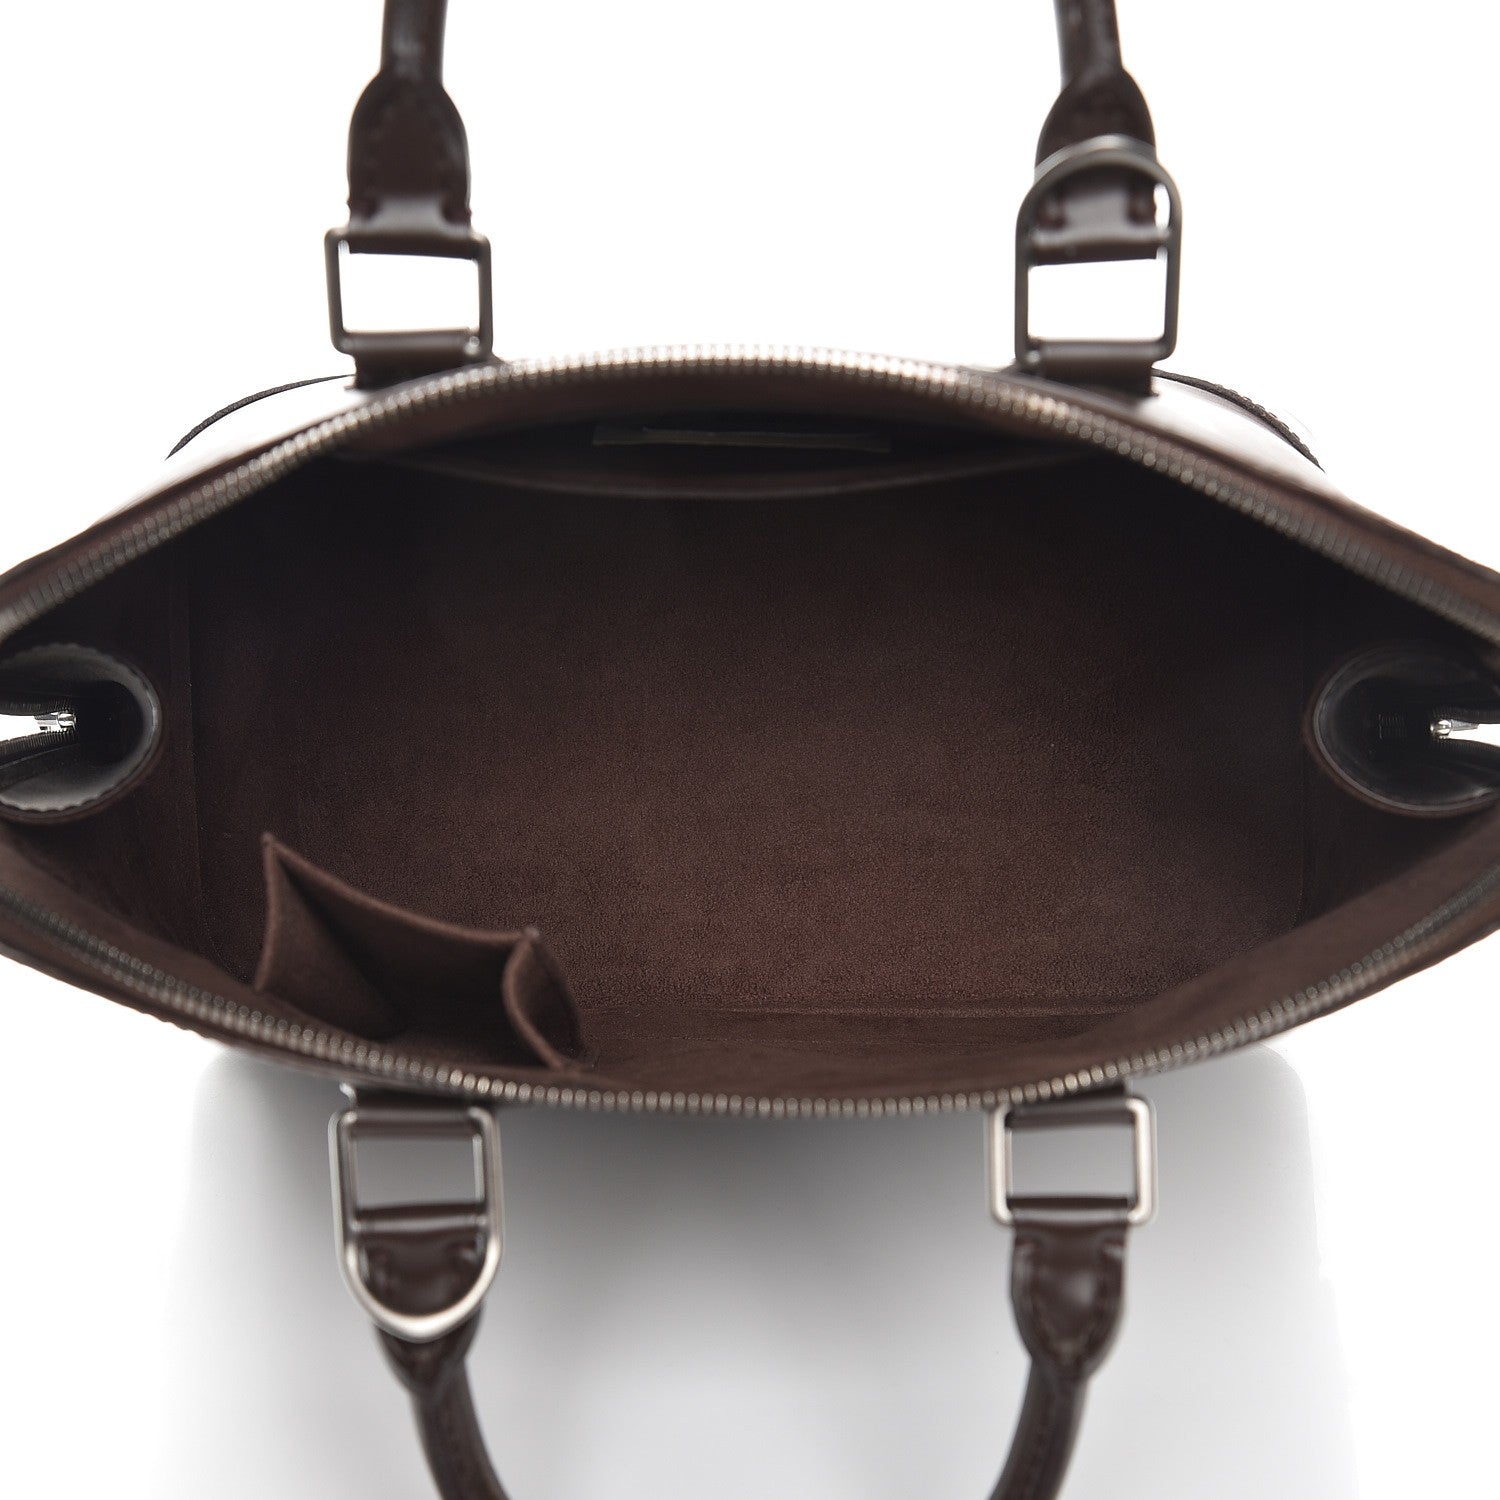 Alma PM, Used & Preloved Louis Vuitton Handbag, LXR USA, Brown